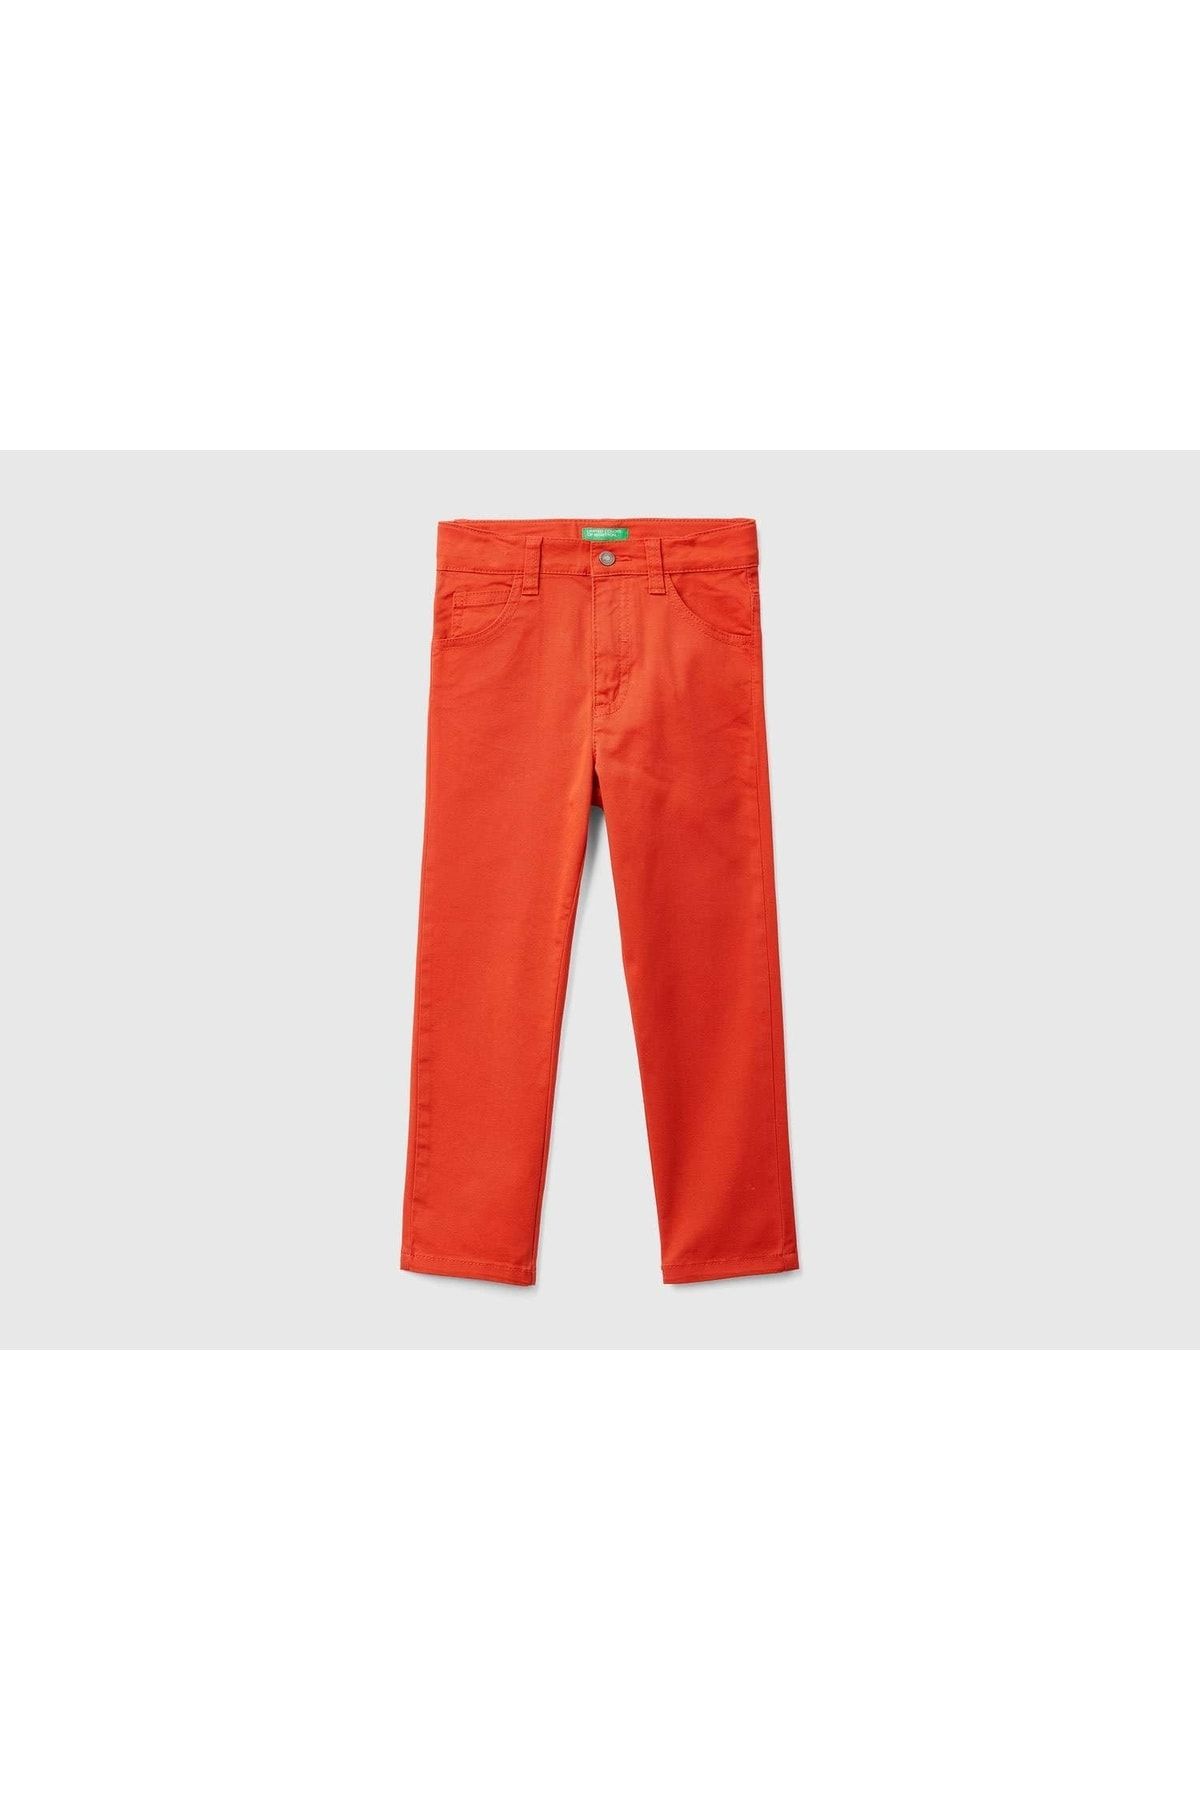 United Colors of Benetton 5 Cepli Gabardin Pantolon